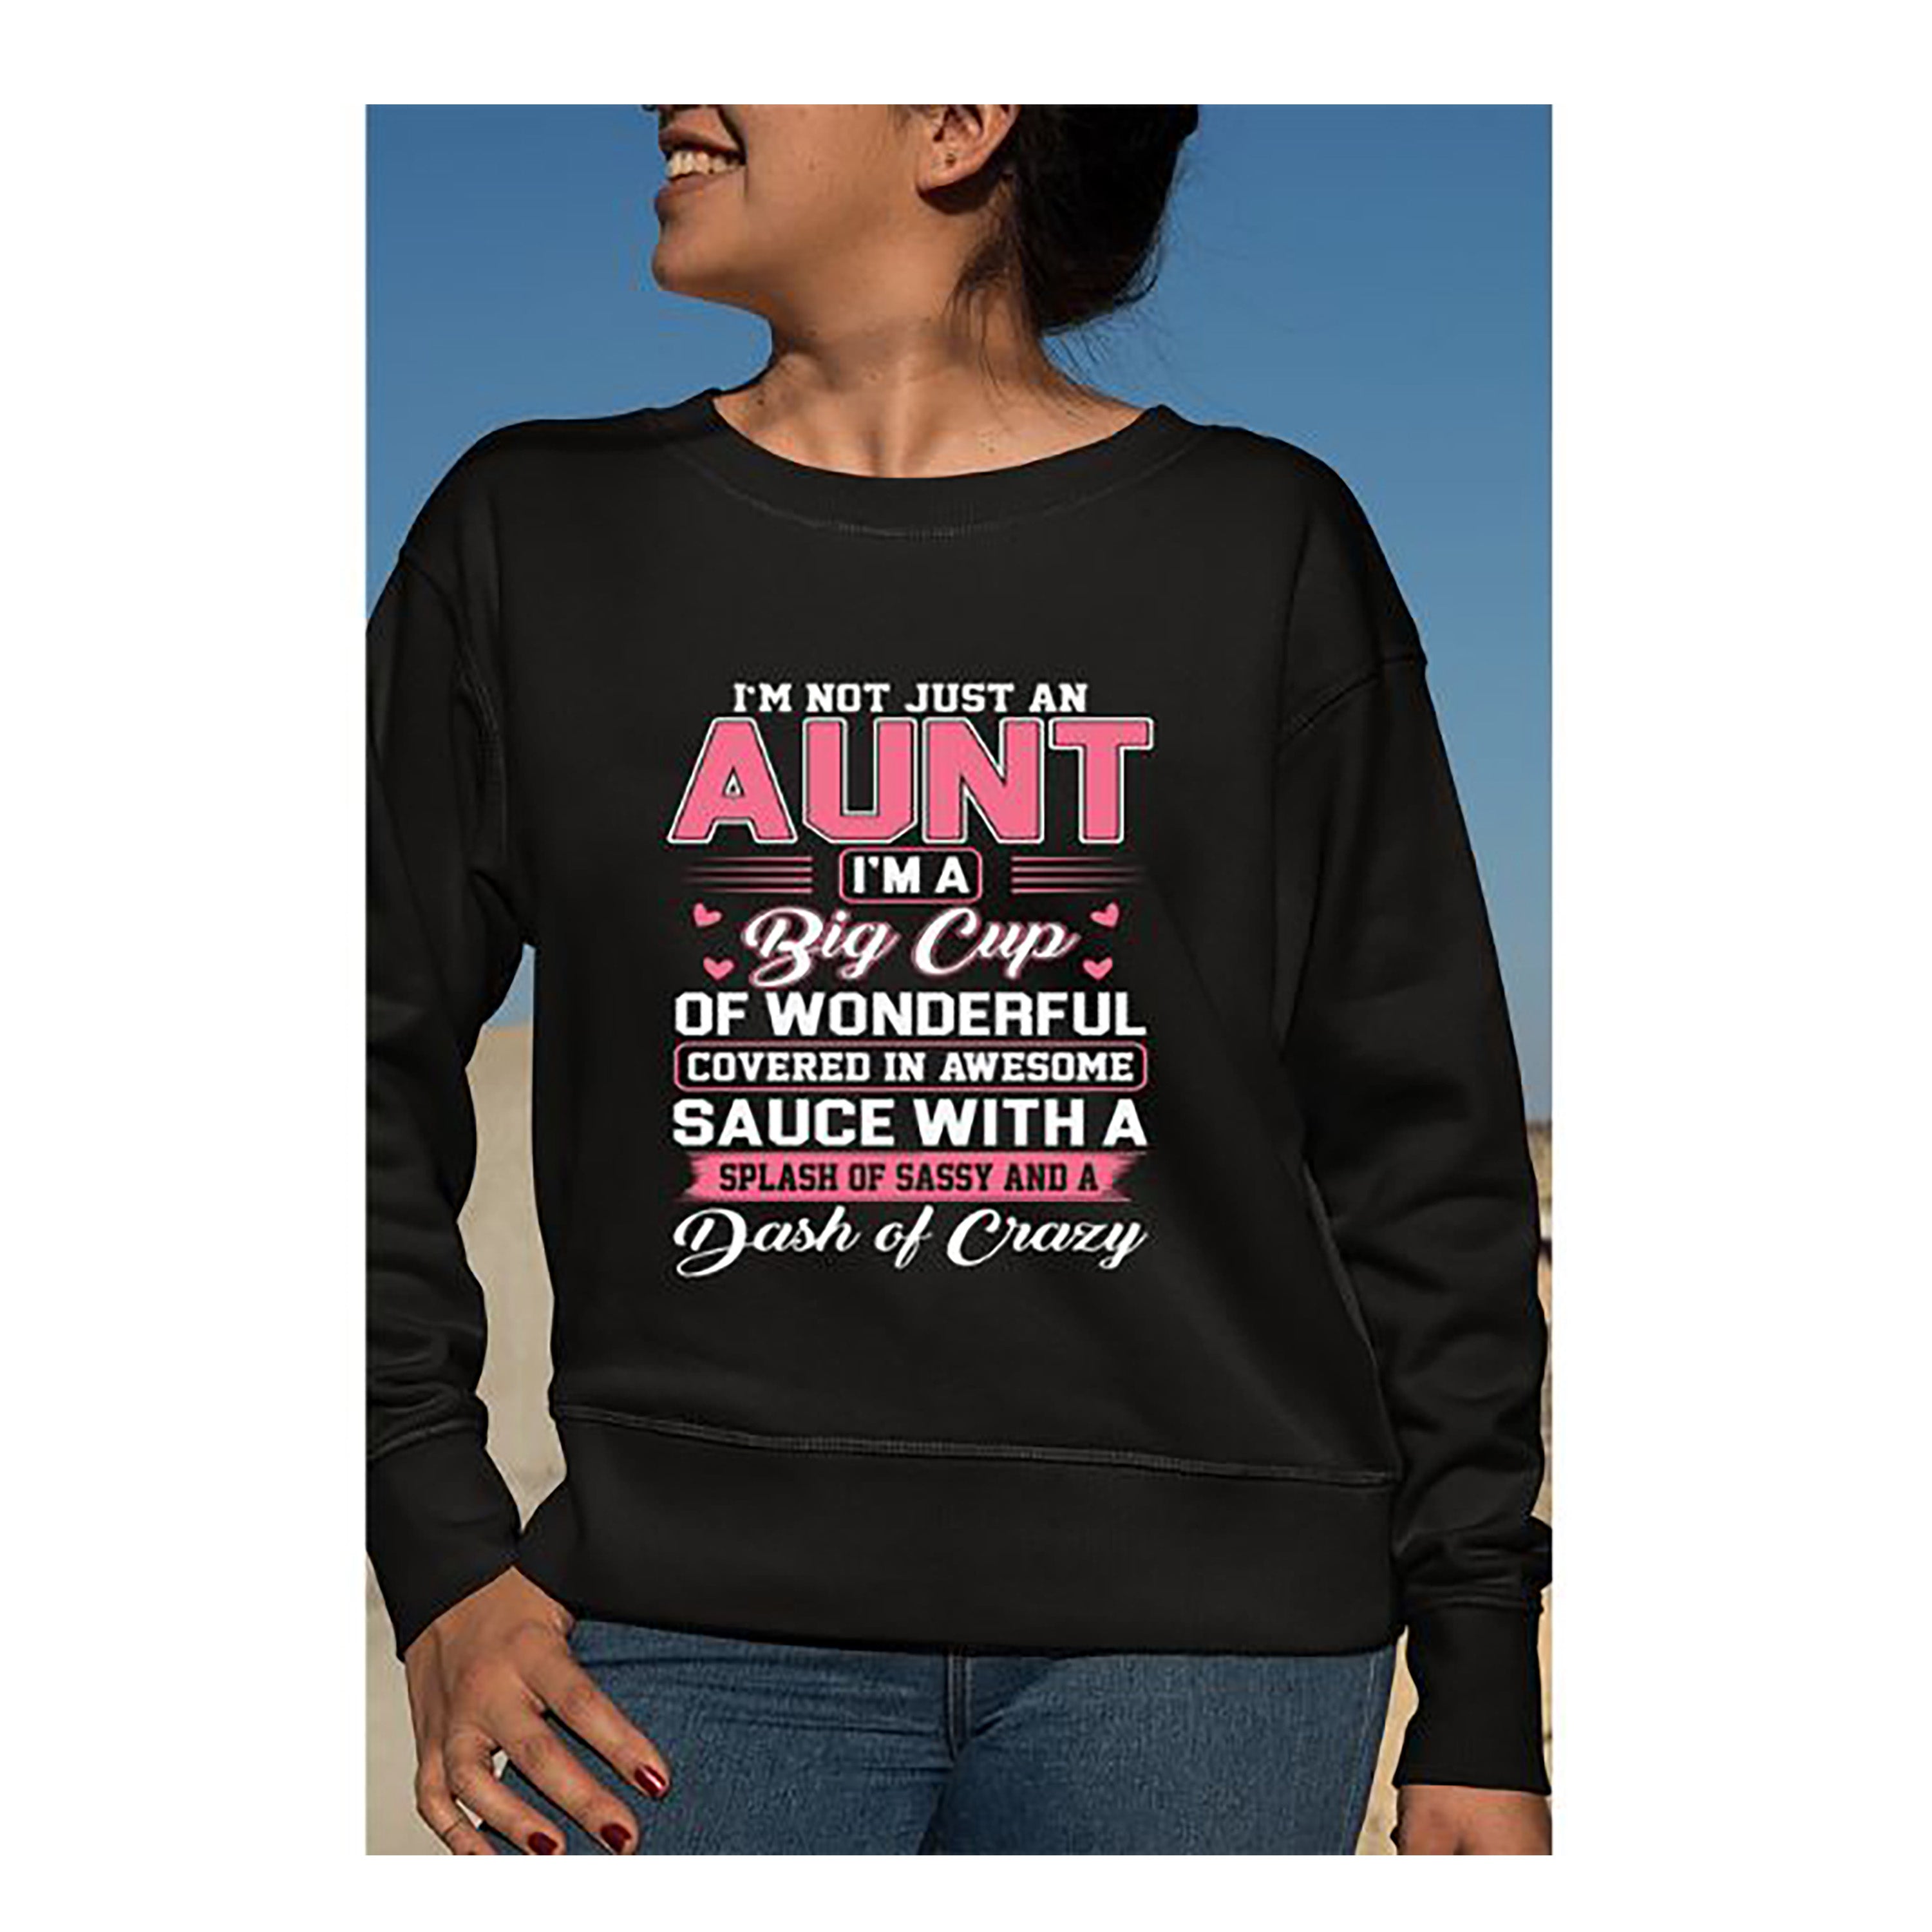 "I'M NOT JUST AN AUNT" Hoodie & Sweatshirt